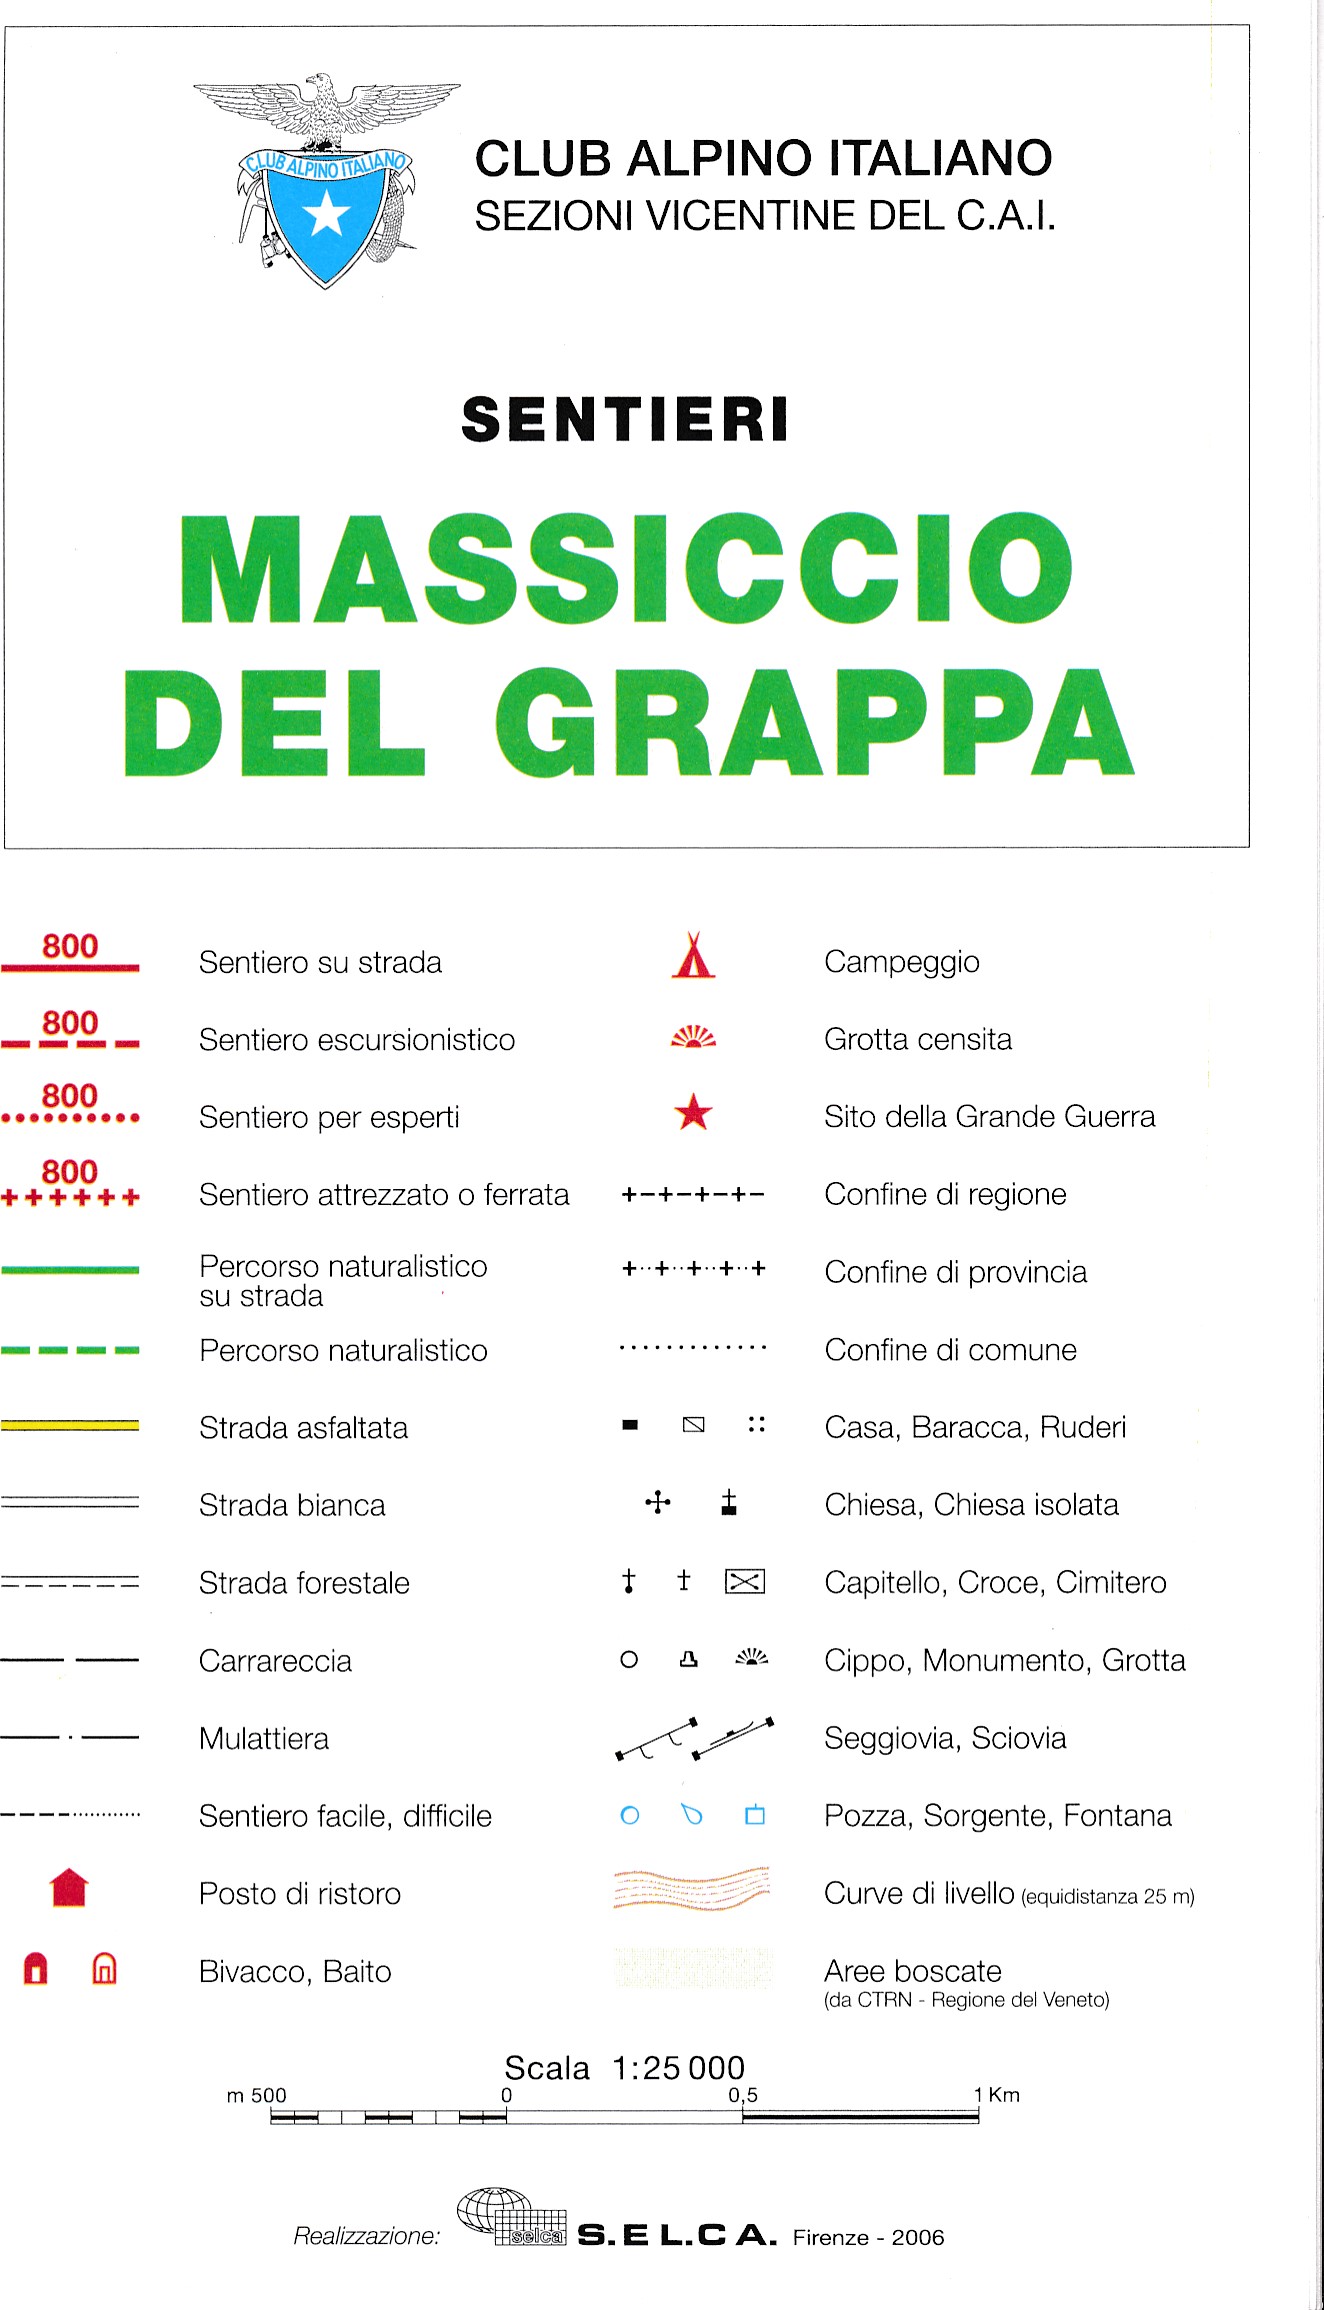 Online bestellen: Wandelkaart Massiccio del Grappa | Club Alpino Italiano